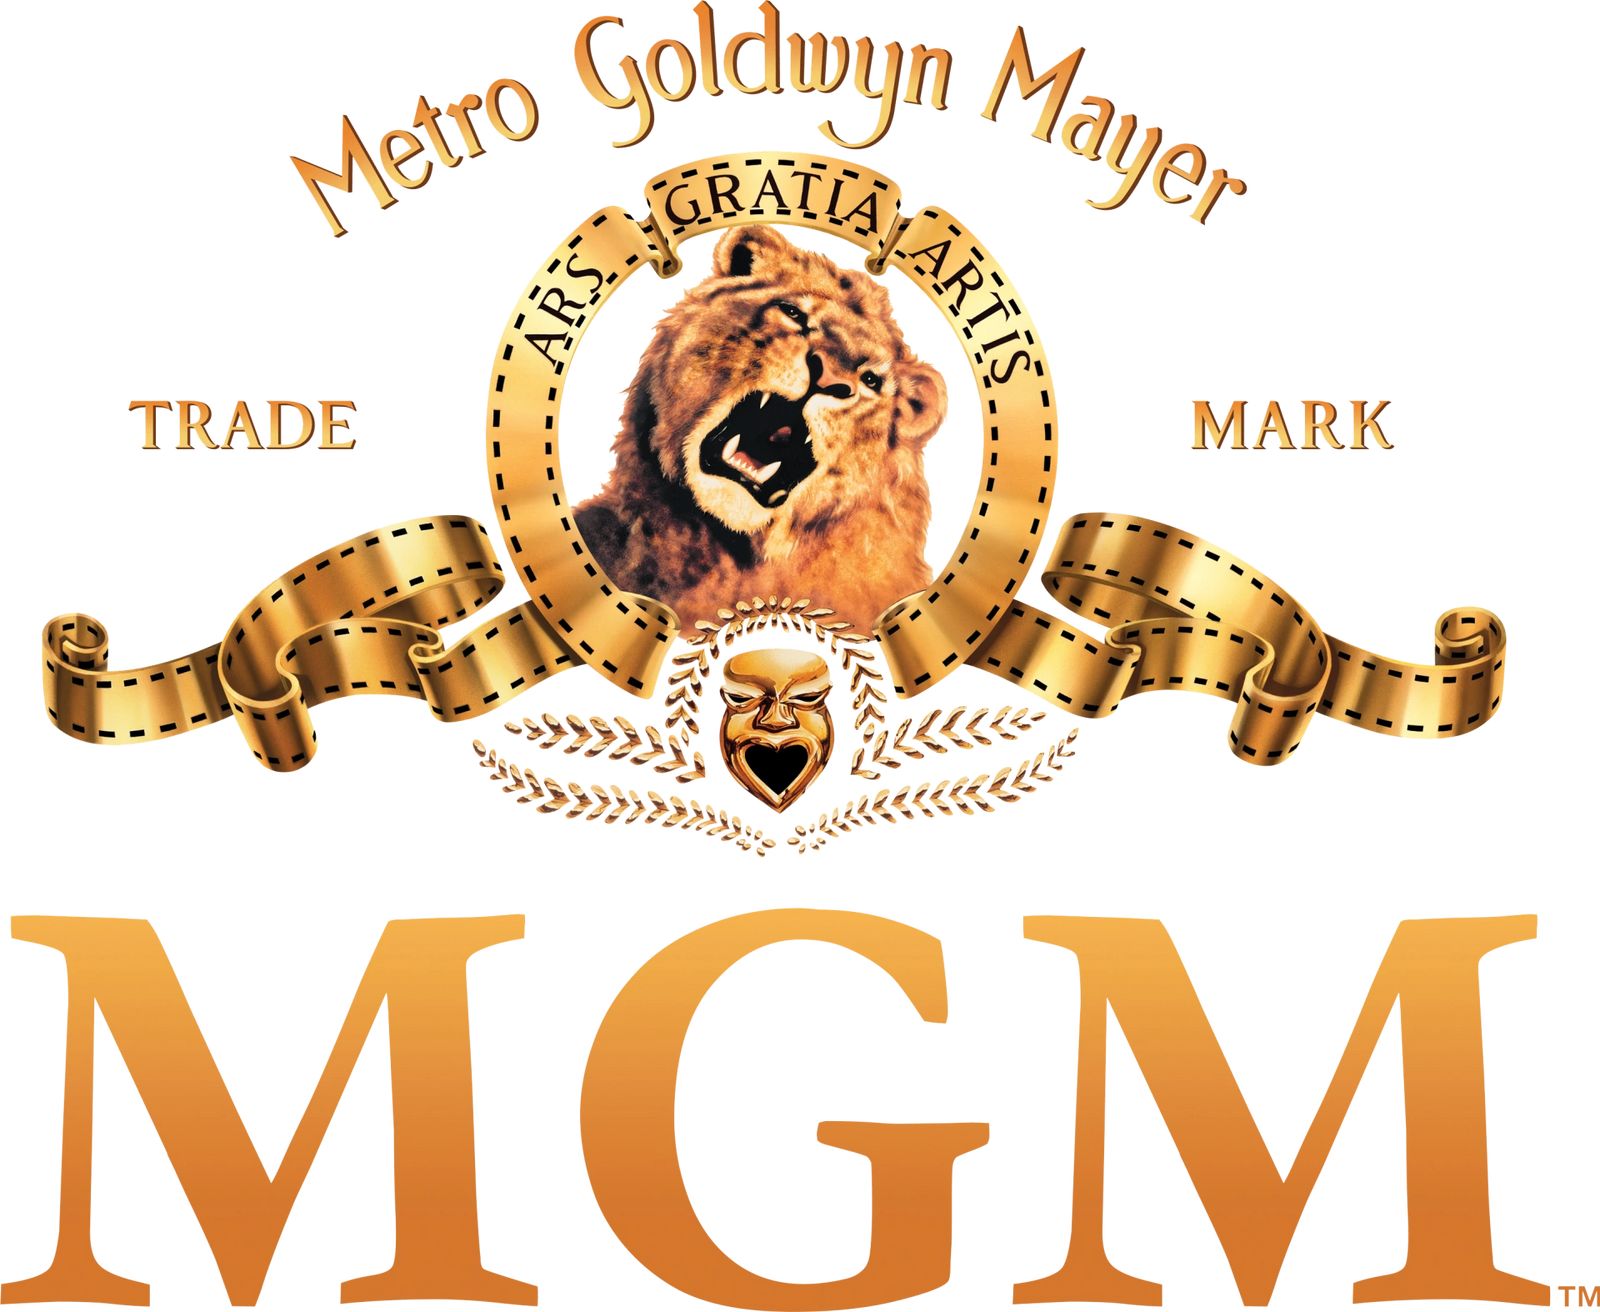 MGM logo.